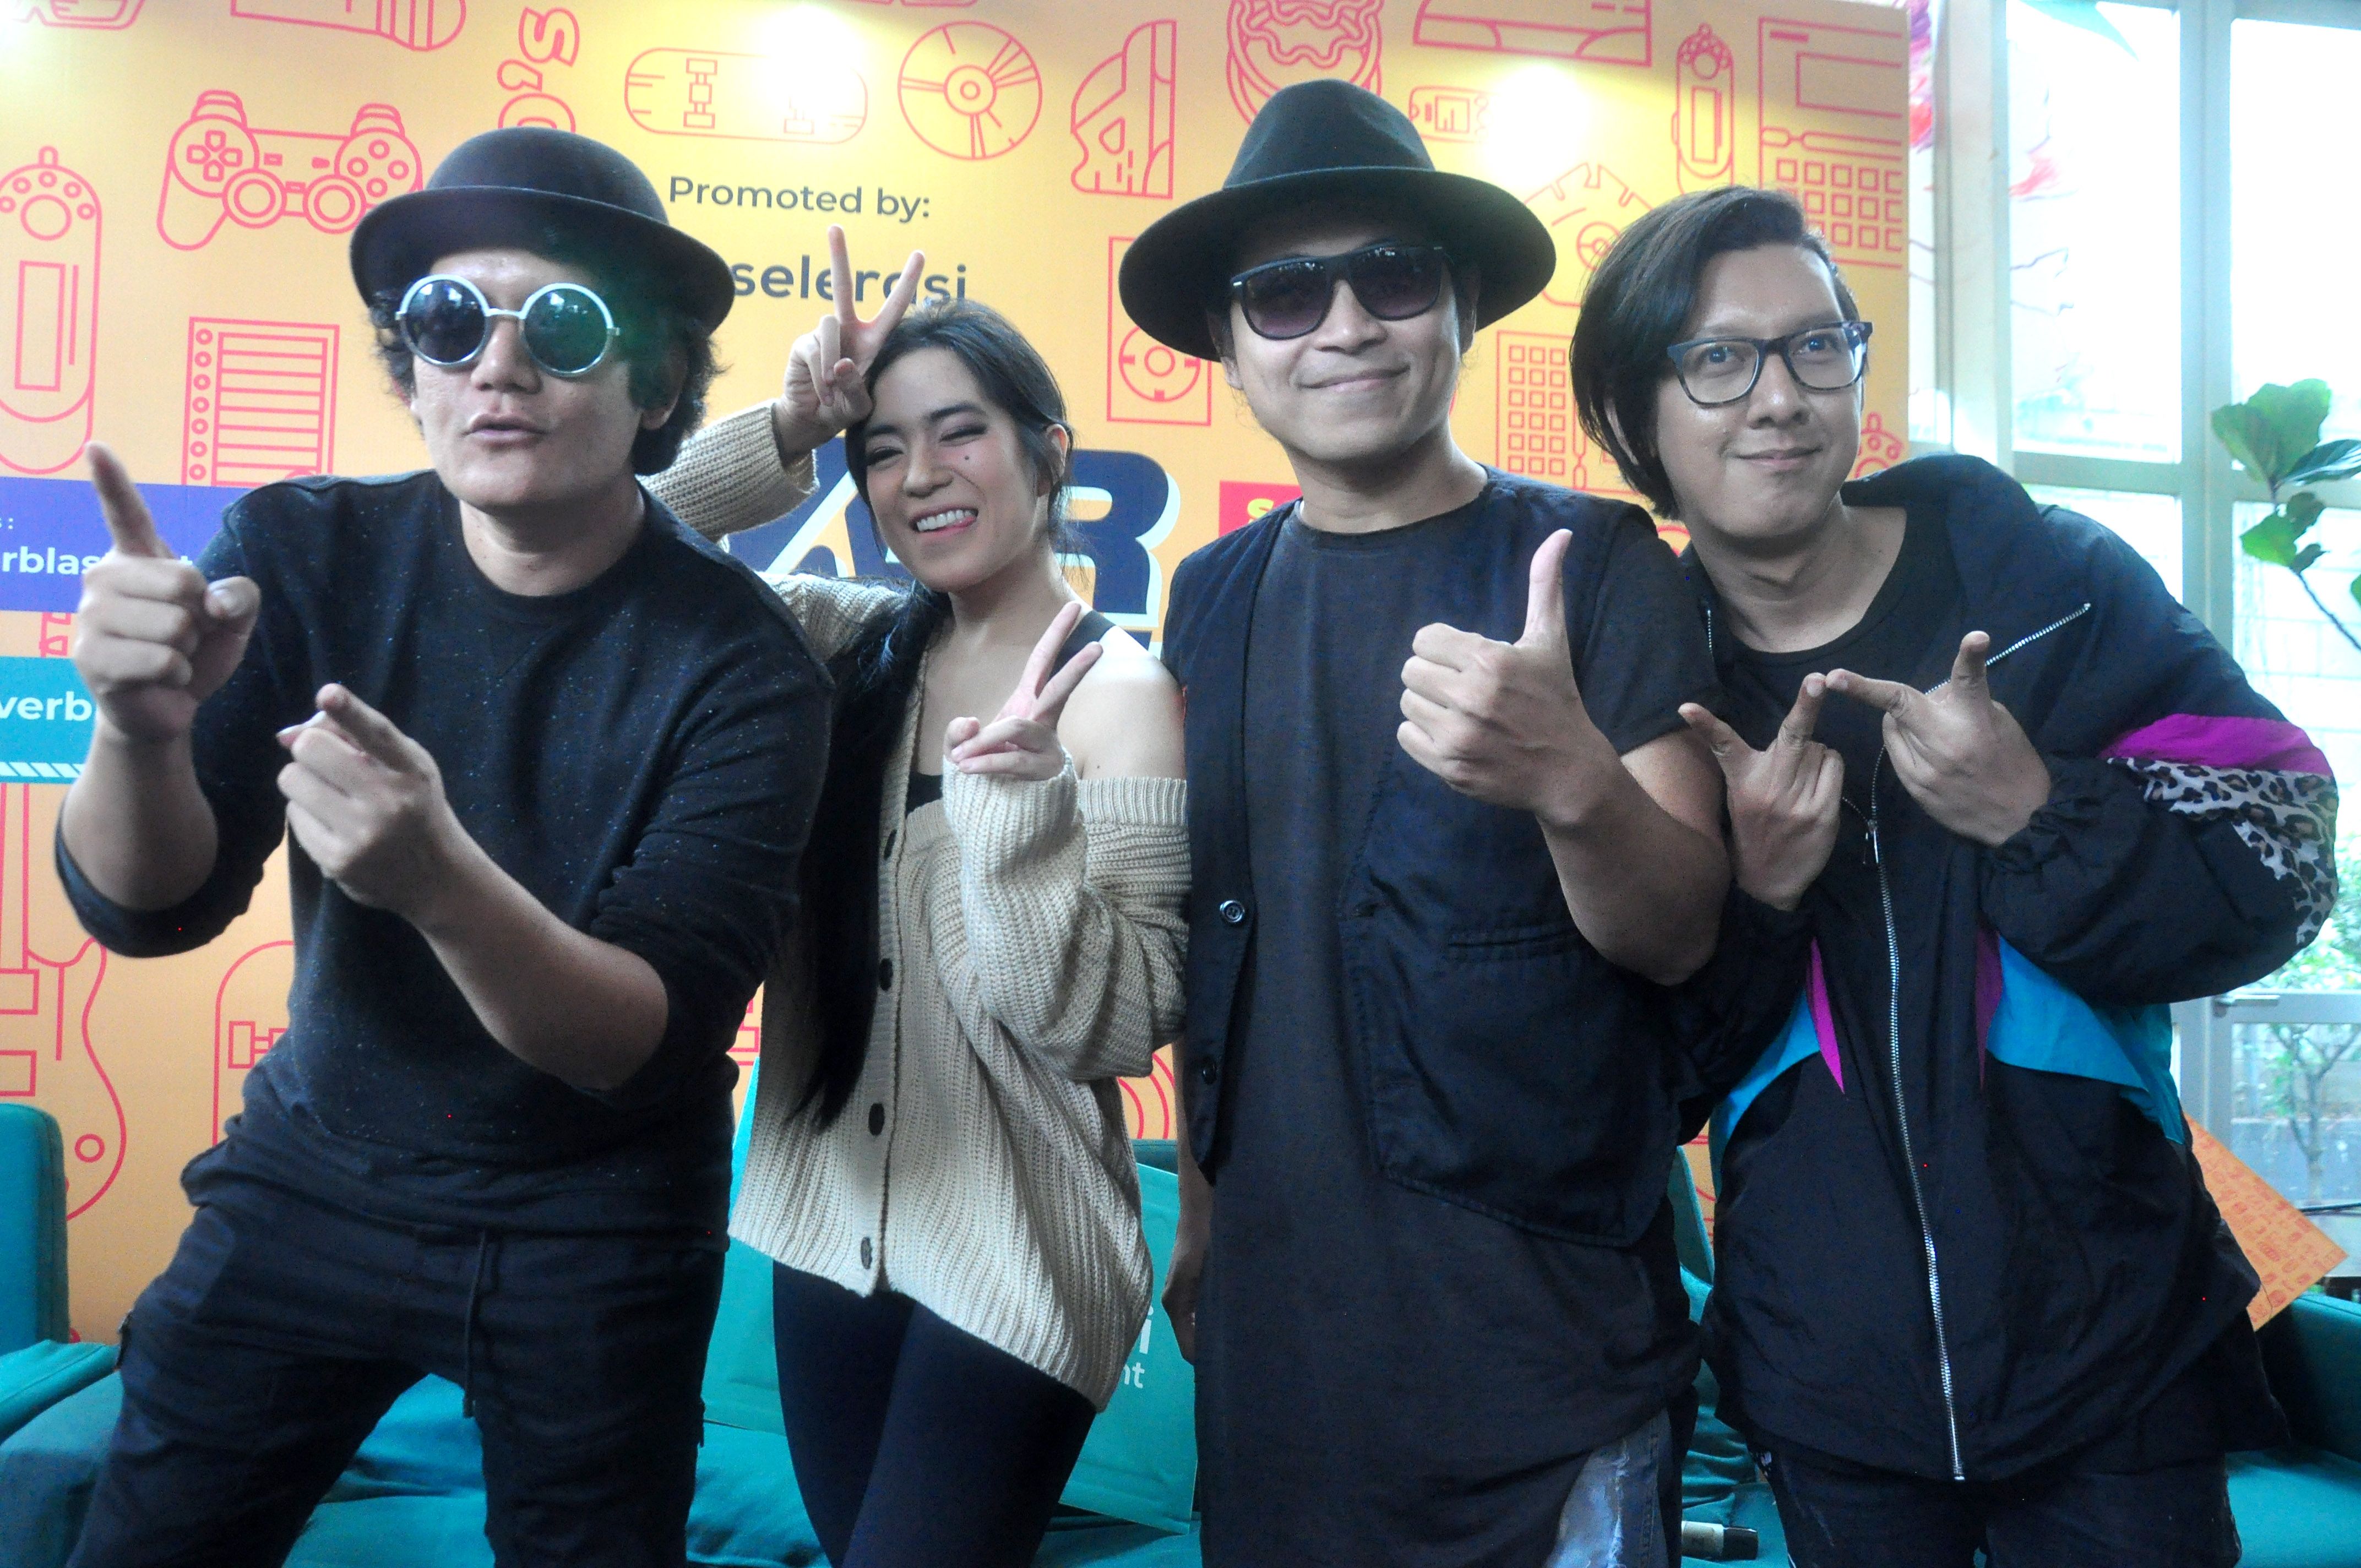 J-Rocks dan Prisa pada jumpa wartawan Everblast Festival di Jakarta.*  